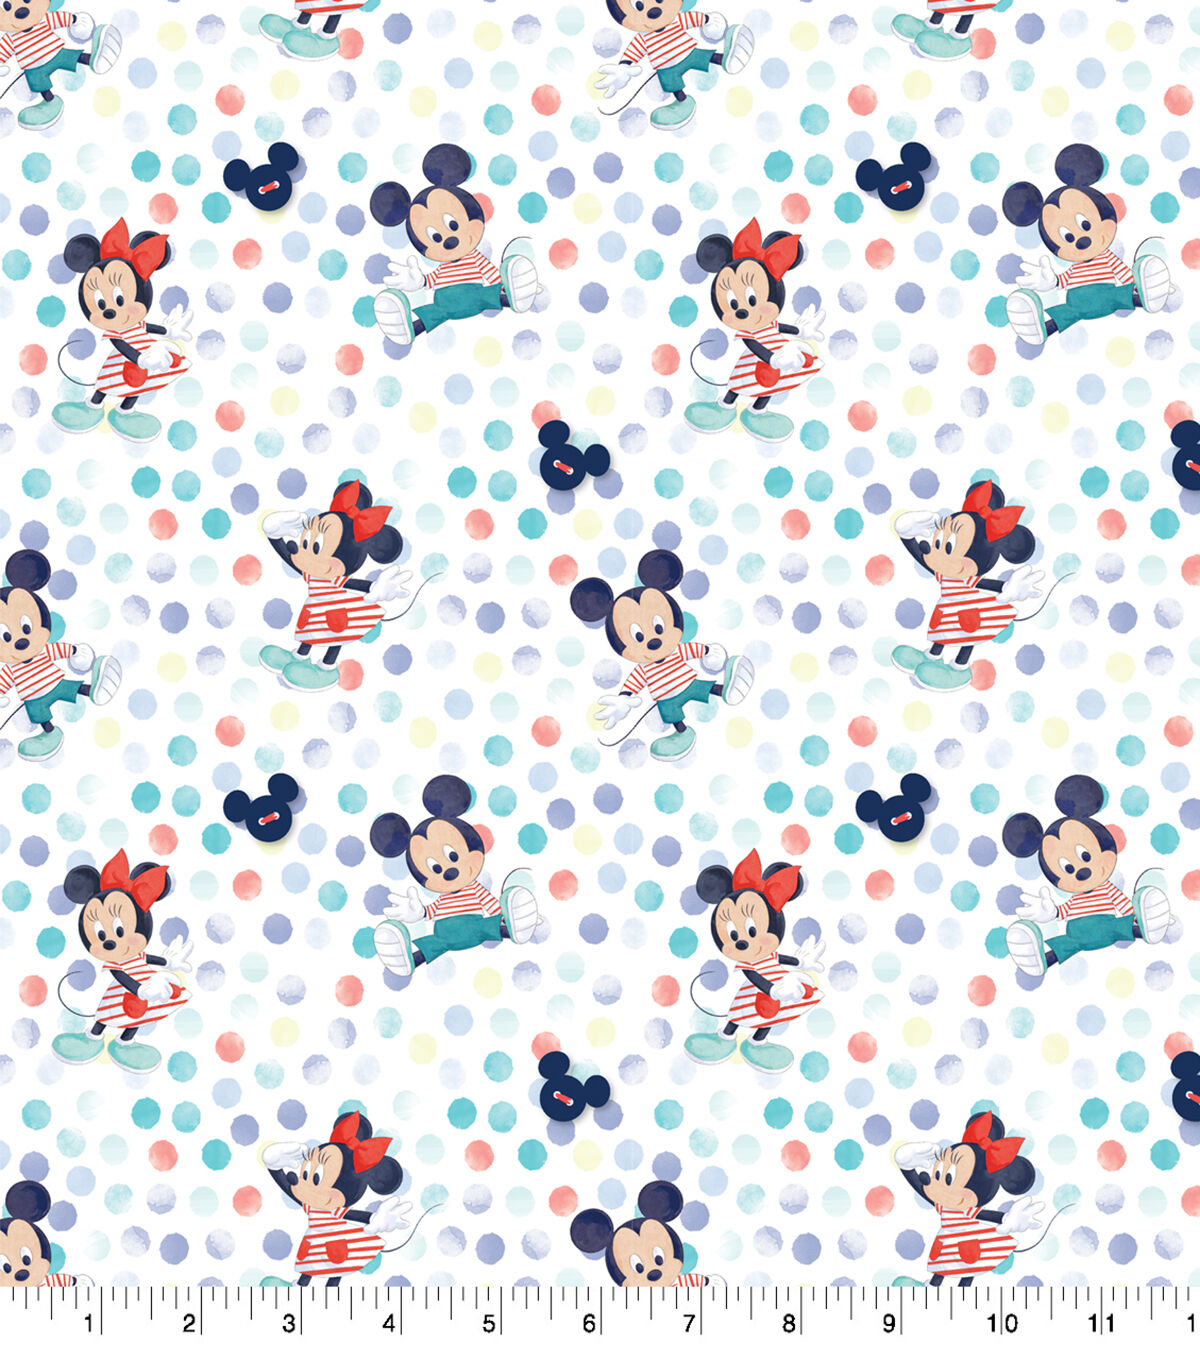 Disney Mickey Mouse Polka Dot Seaside Cotton Fabric by Disney